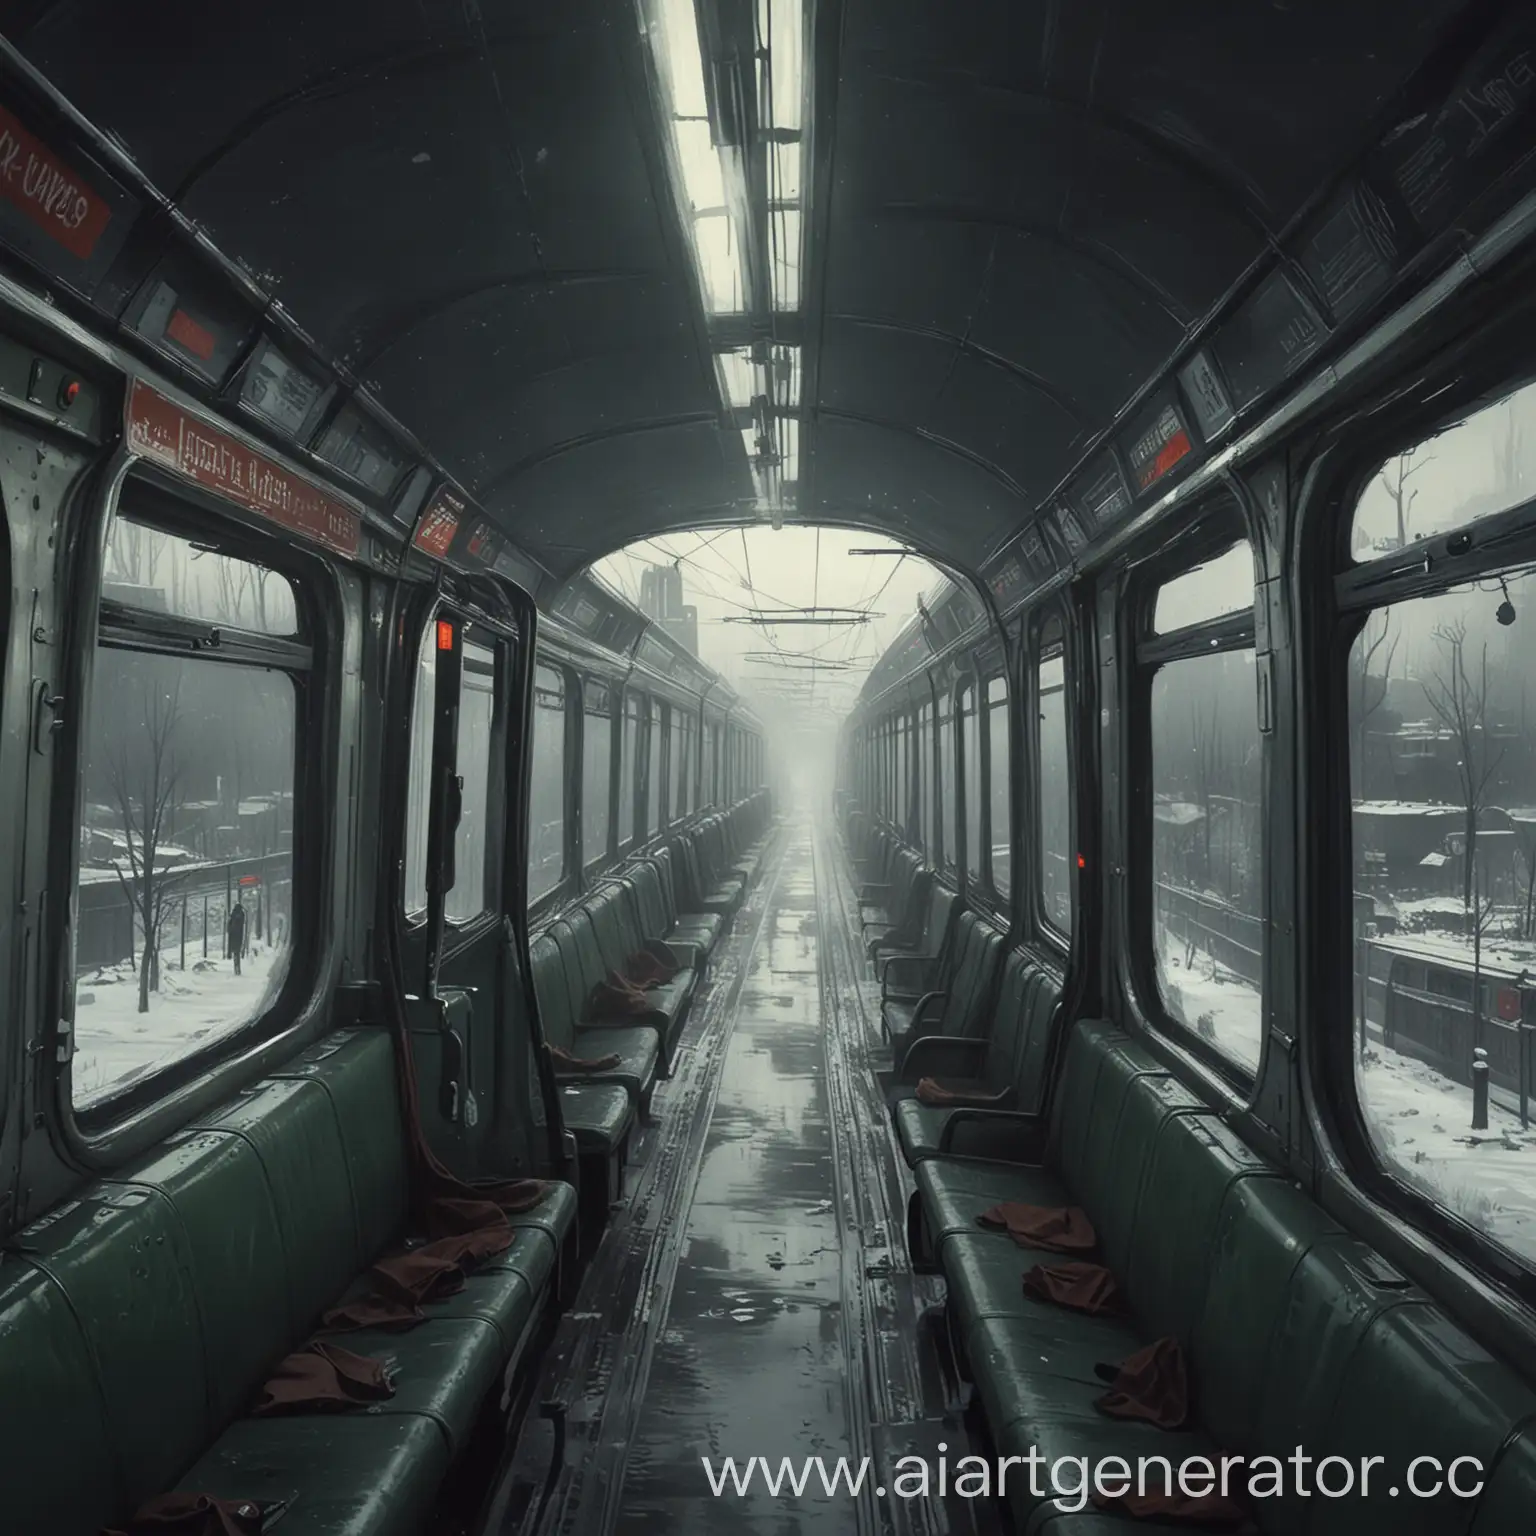 Eerie-Soviet-Cityscape-Metro-Train-Ride-Through-Futuristic-MoscowLeningrad-Avenue-1970s